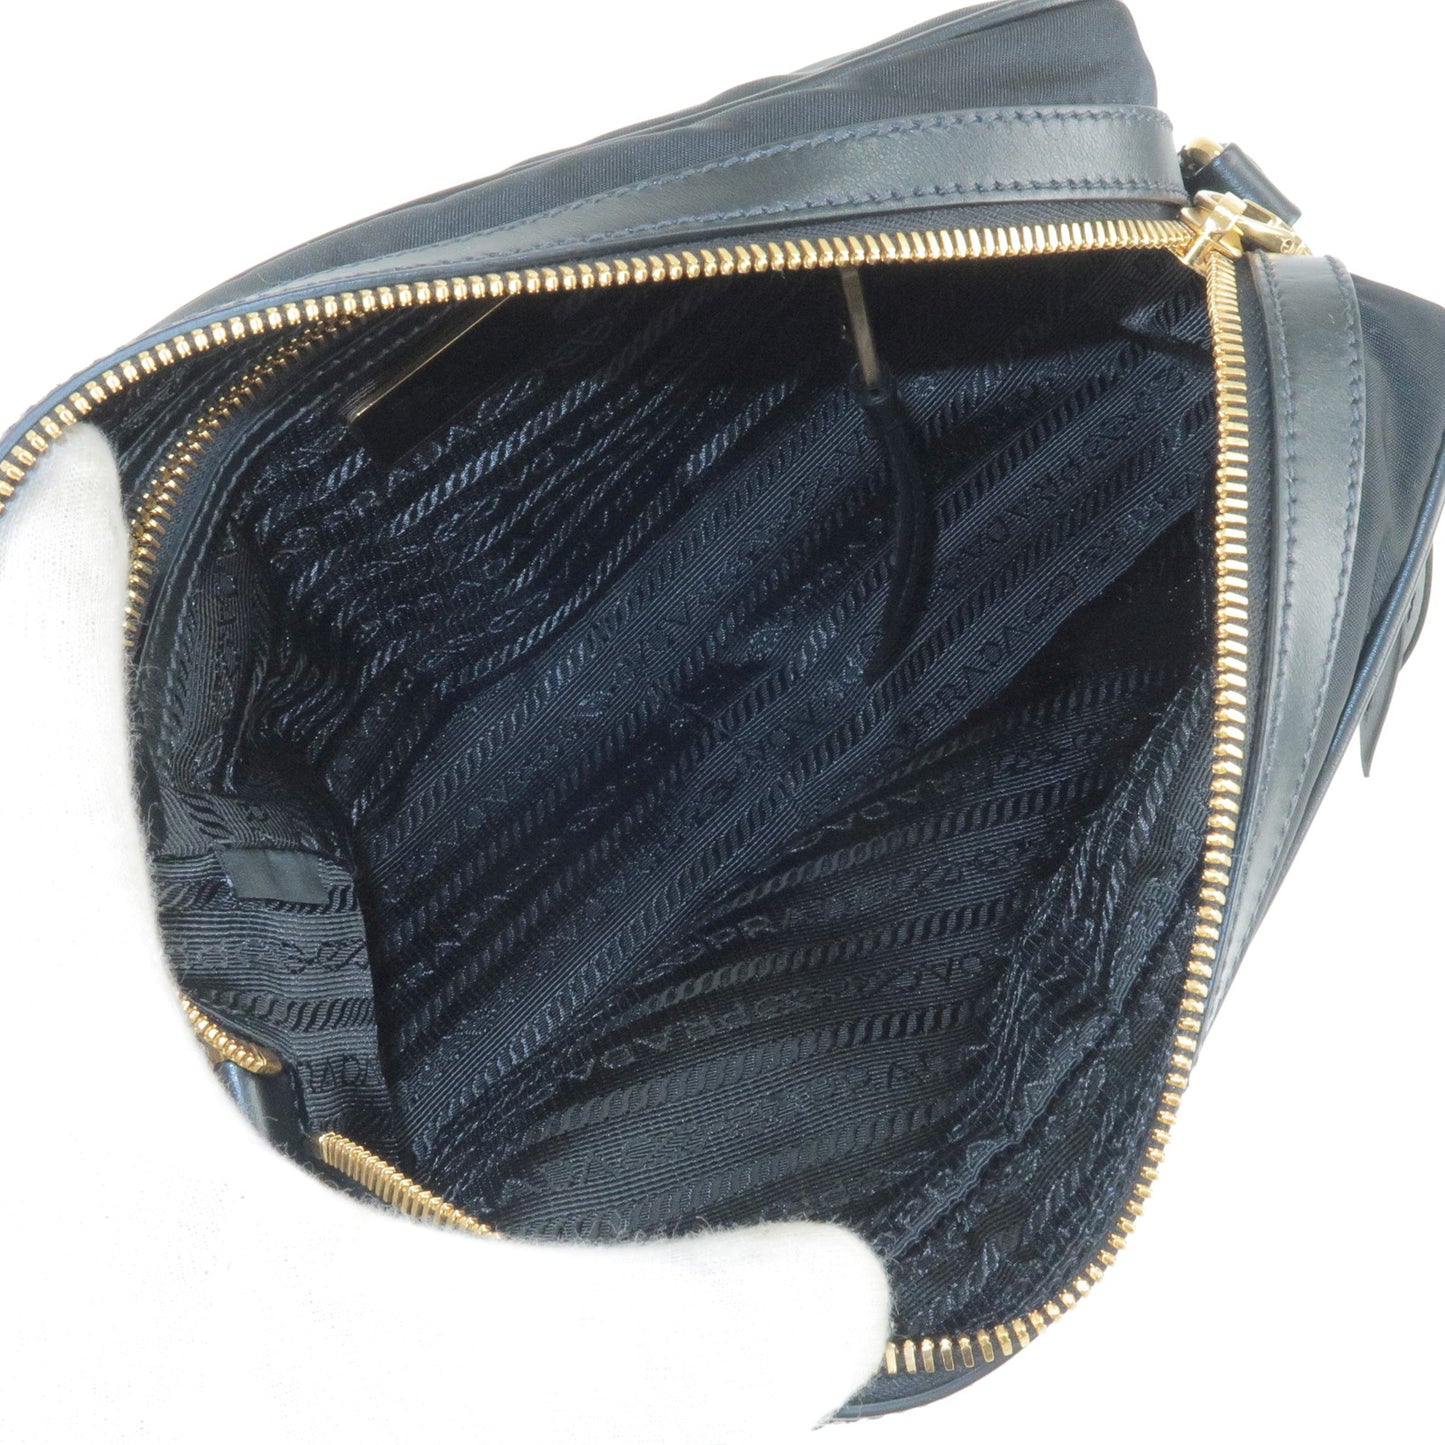 PRADA Logo Nylon Leather Shoulder Bag NERO Black 1BH089